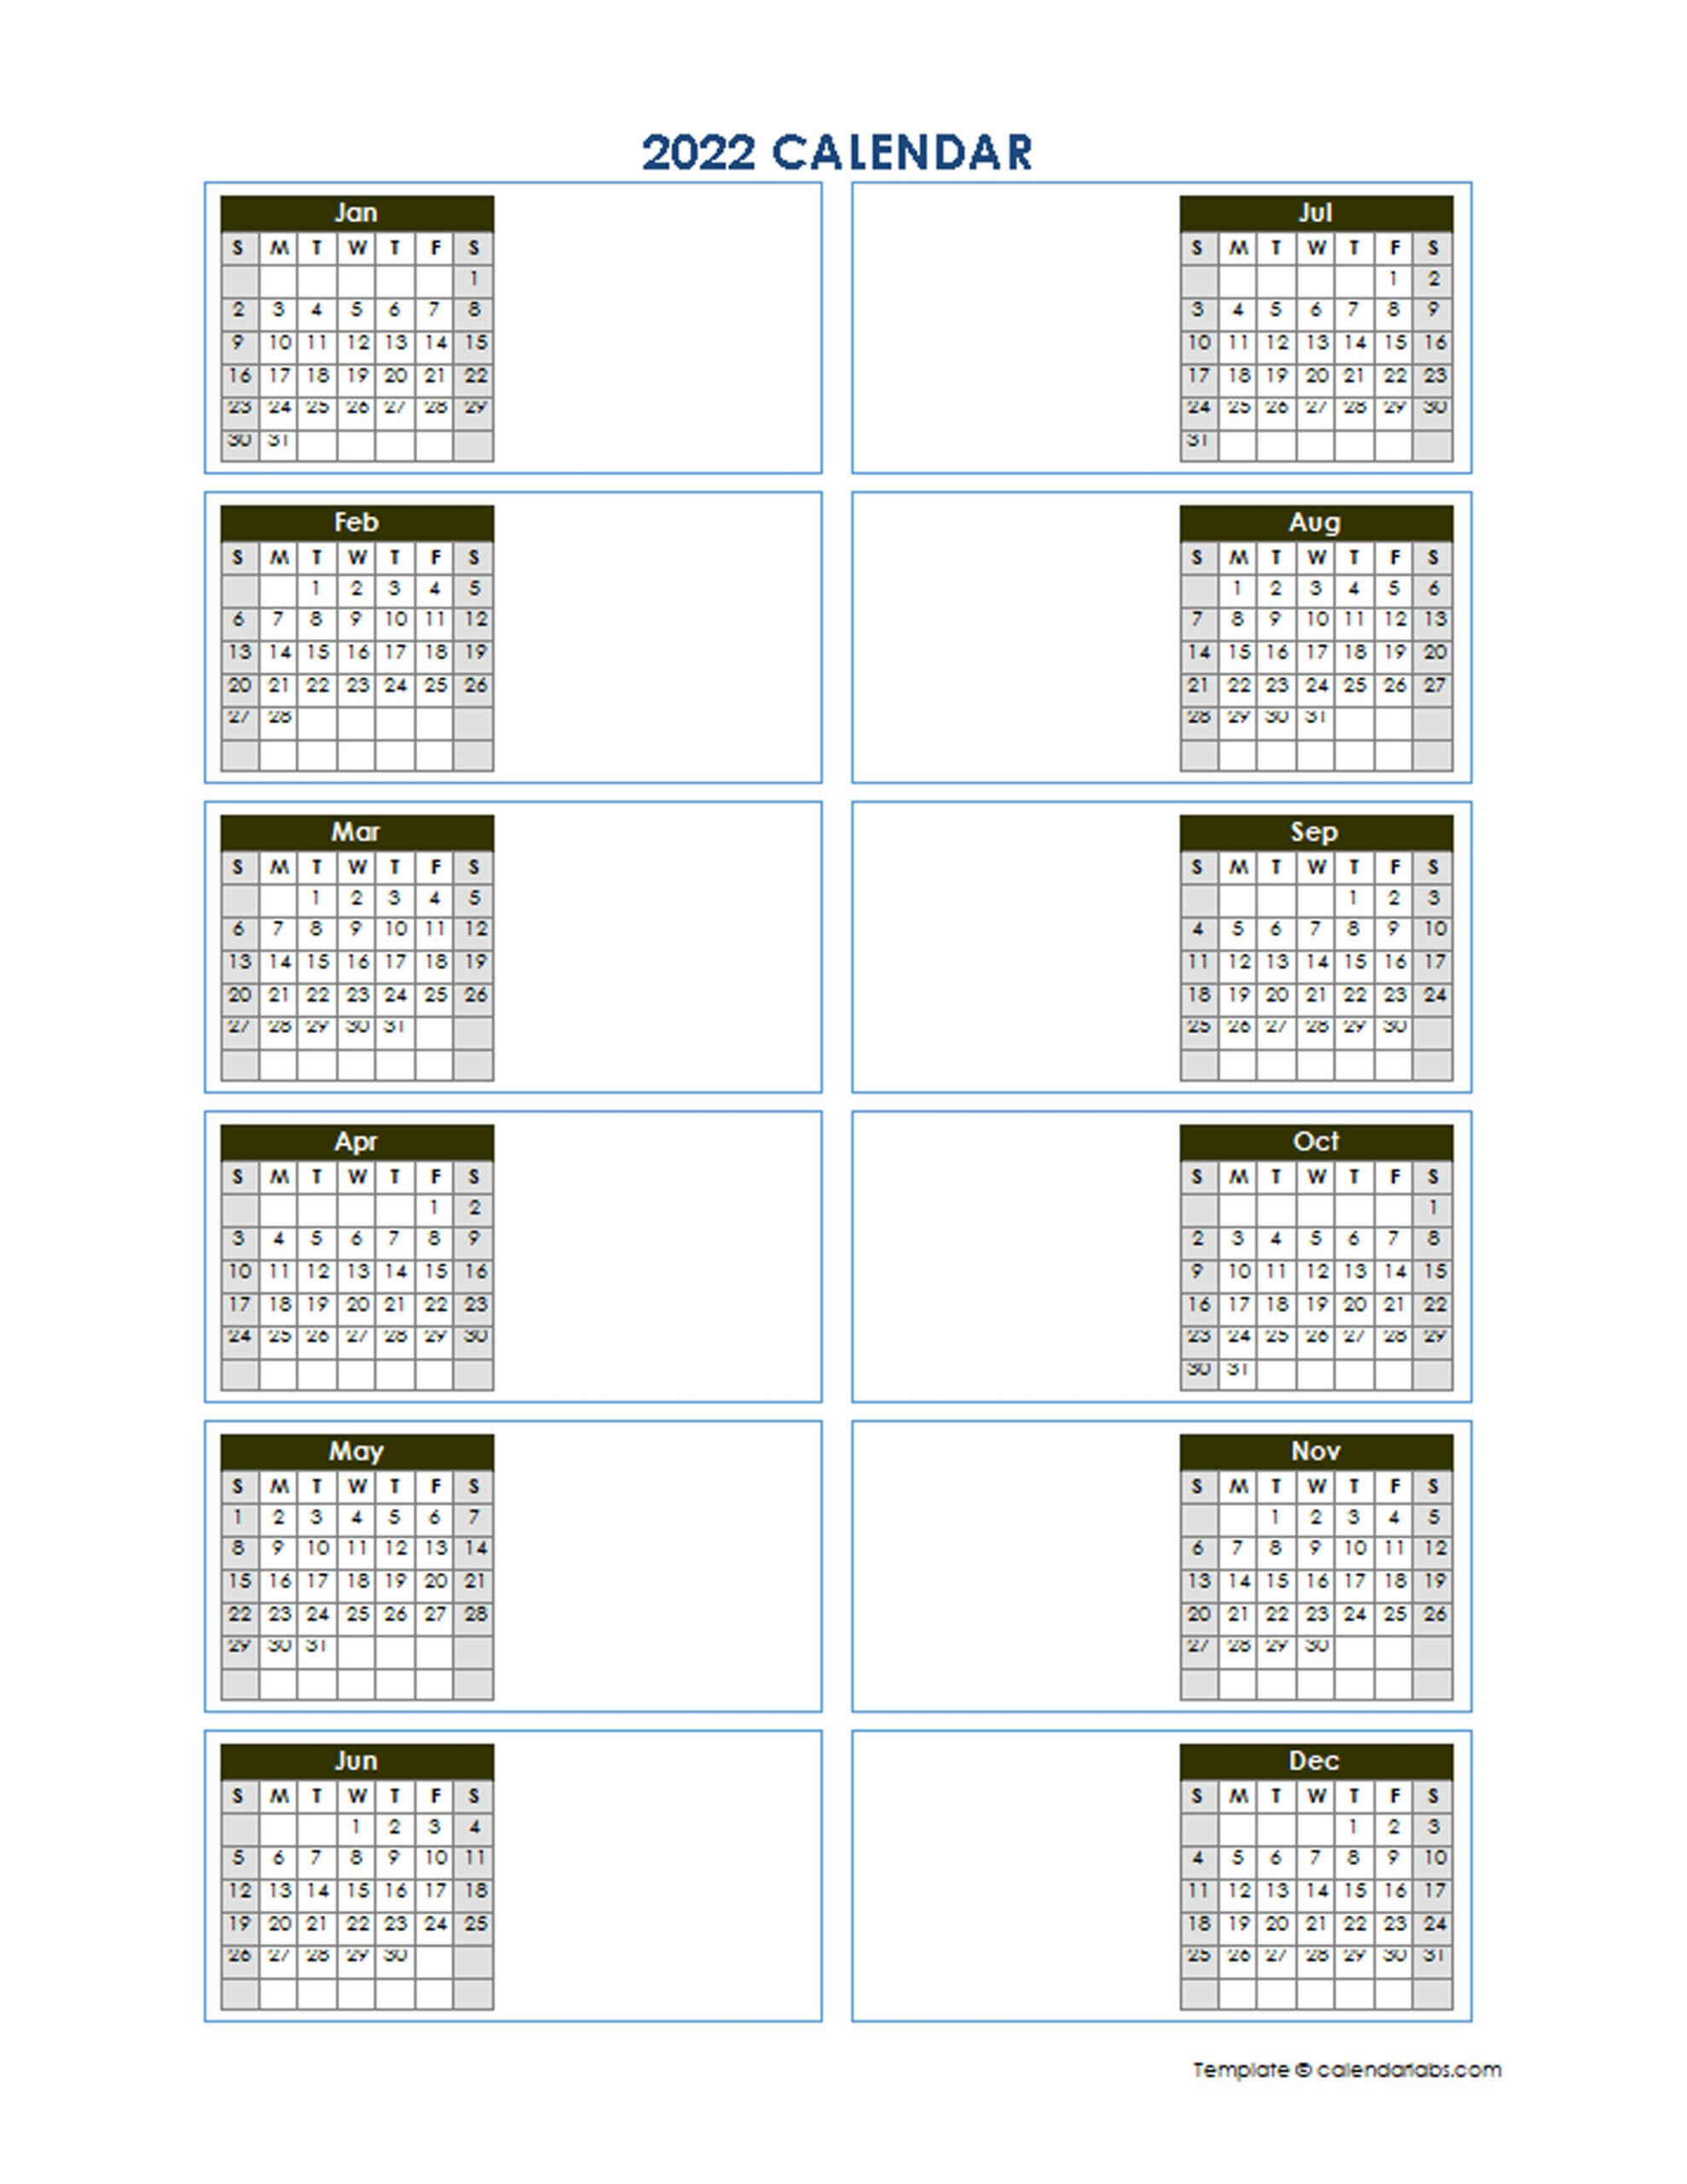 2022 blank yearly calendar template vertical design free